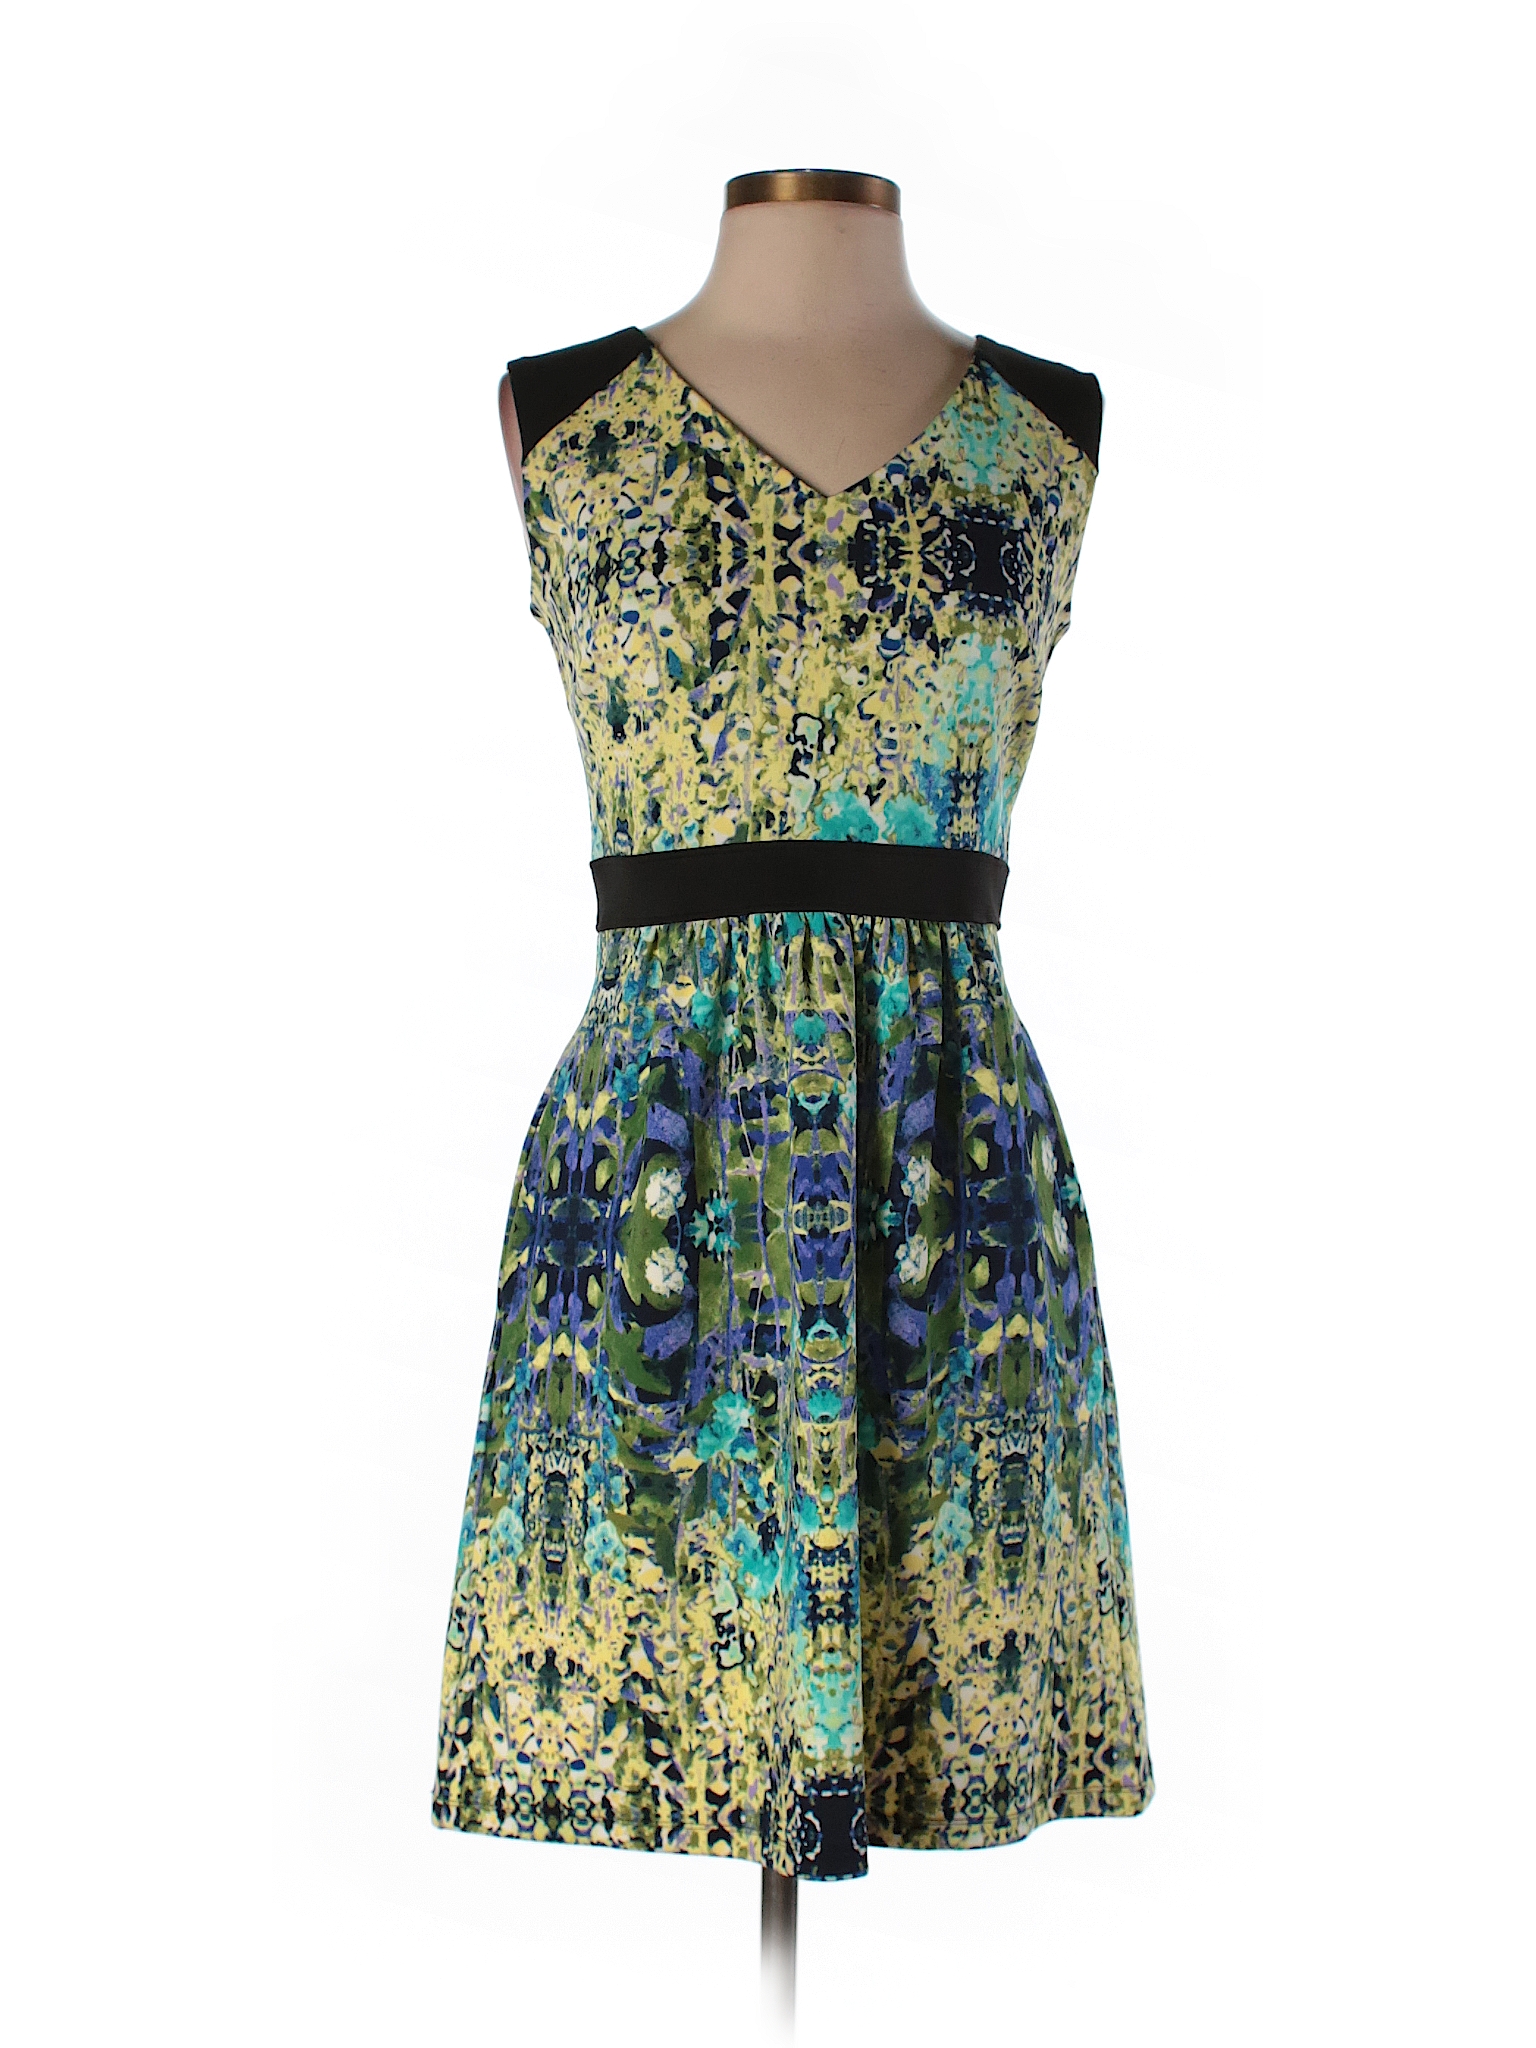 Cynthia Rowley TJX Print Green Casual Dress Size 4 - 66% off | thredUP